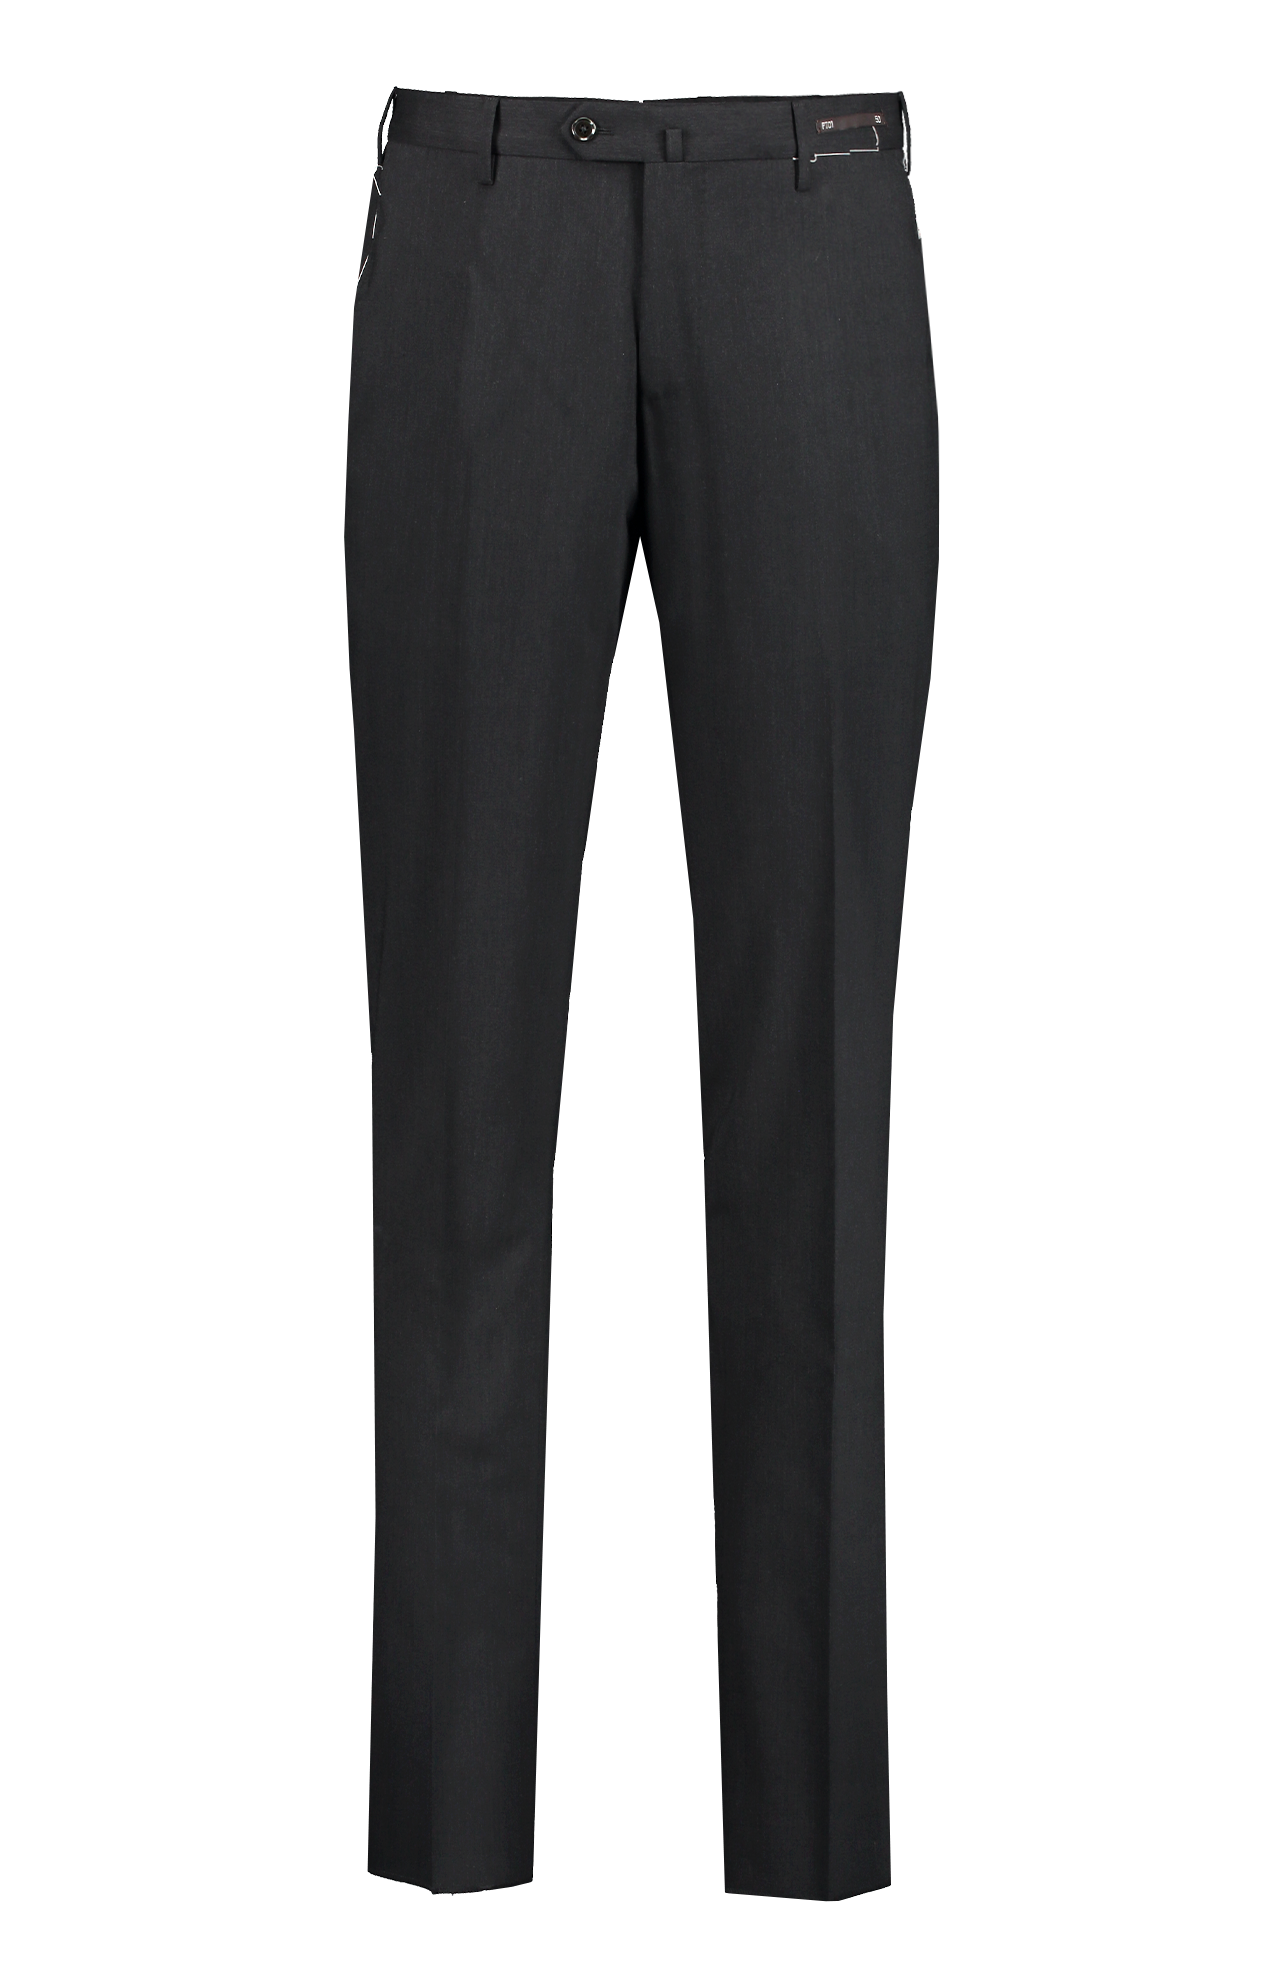 PT Torino Wool Plain Weave Trouser Charcoal Grey Mannequin Image (7062203105395)